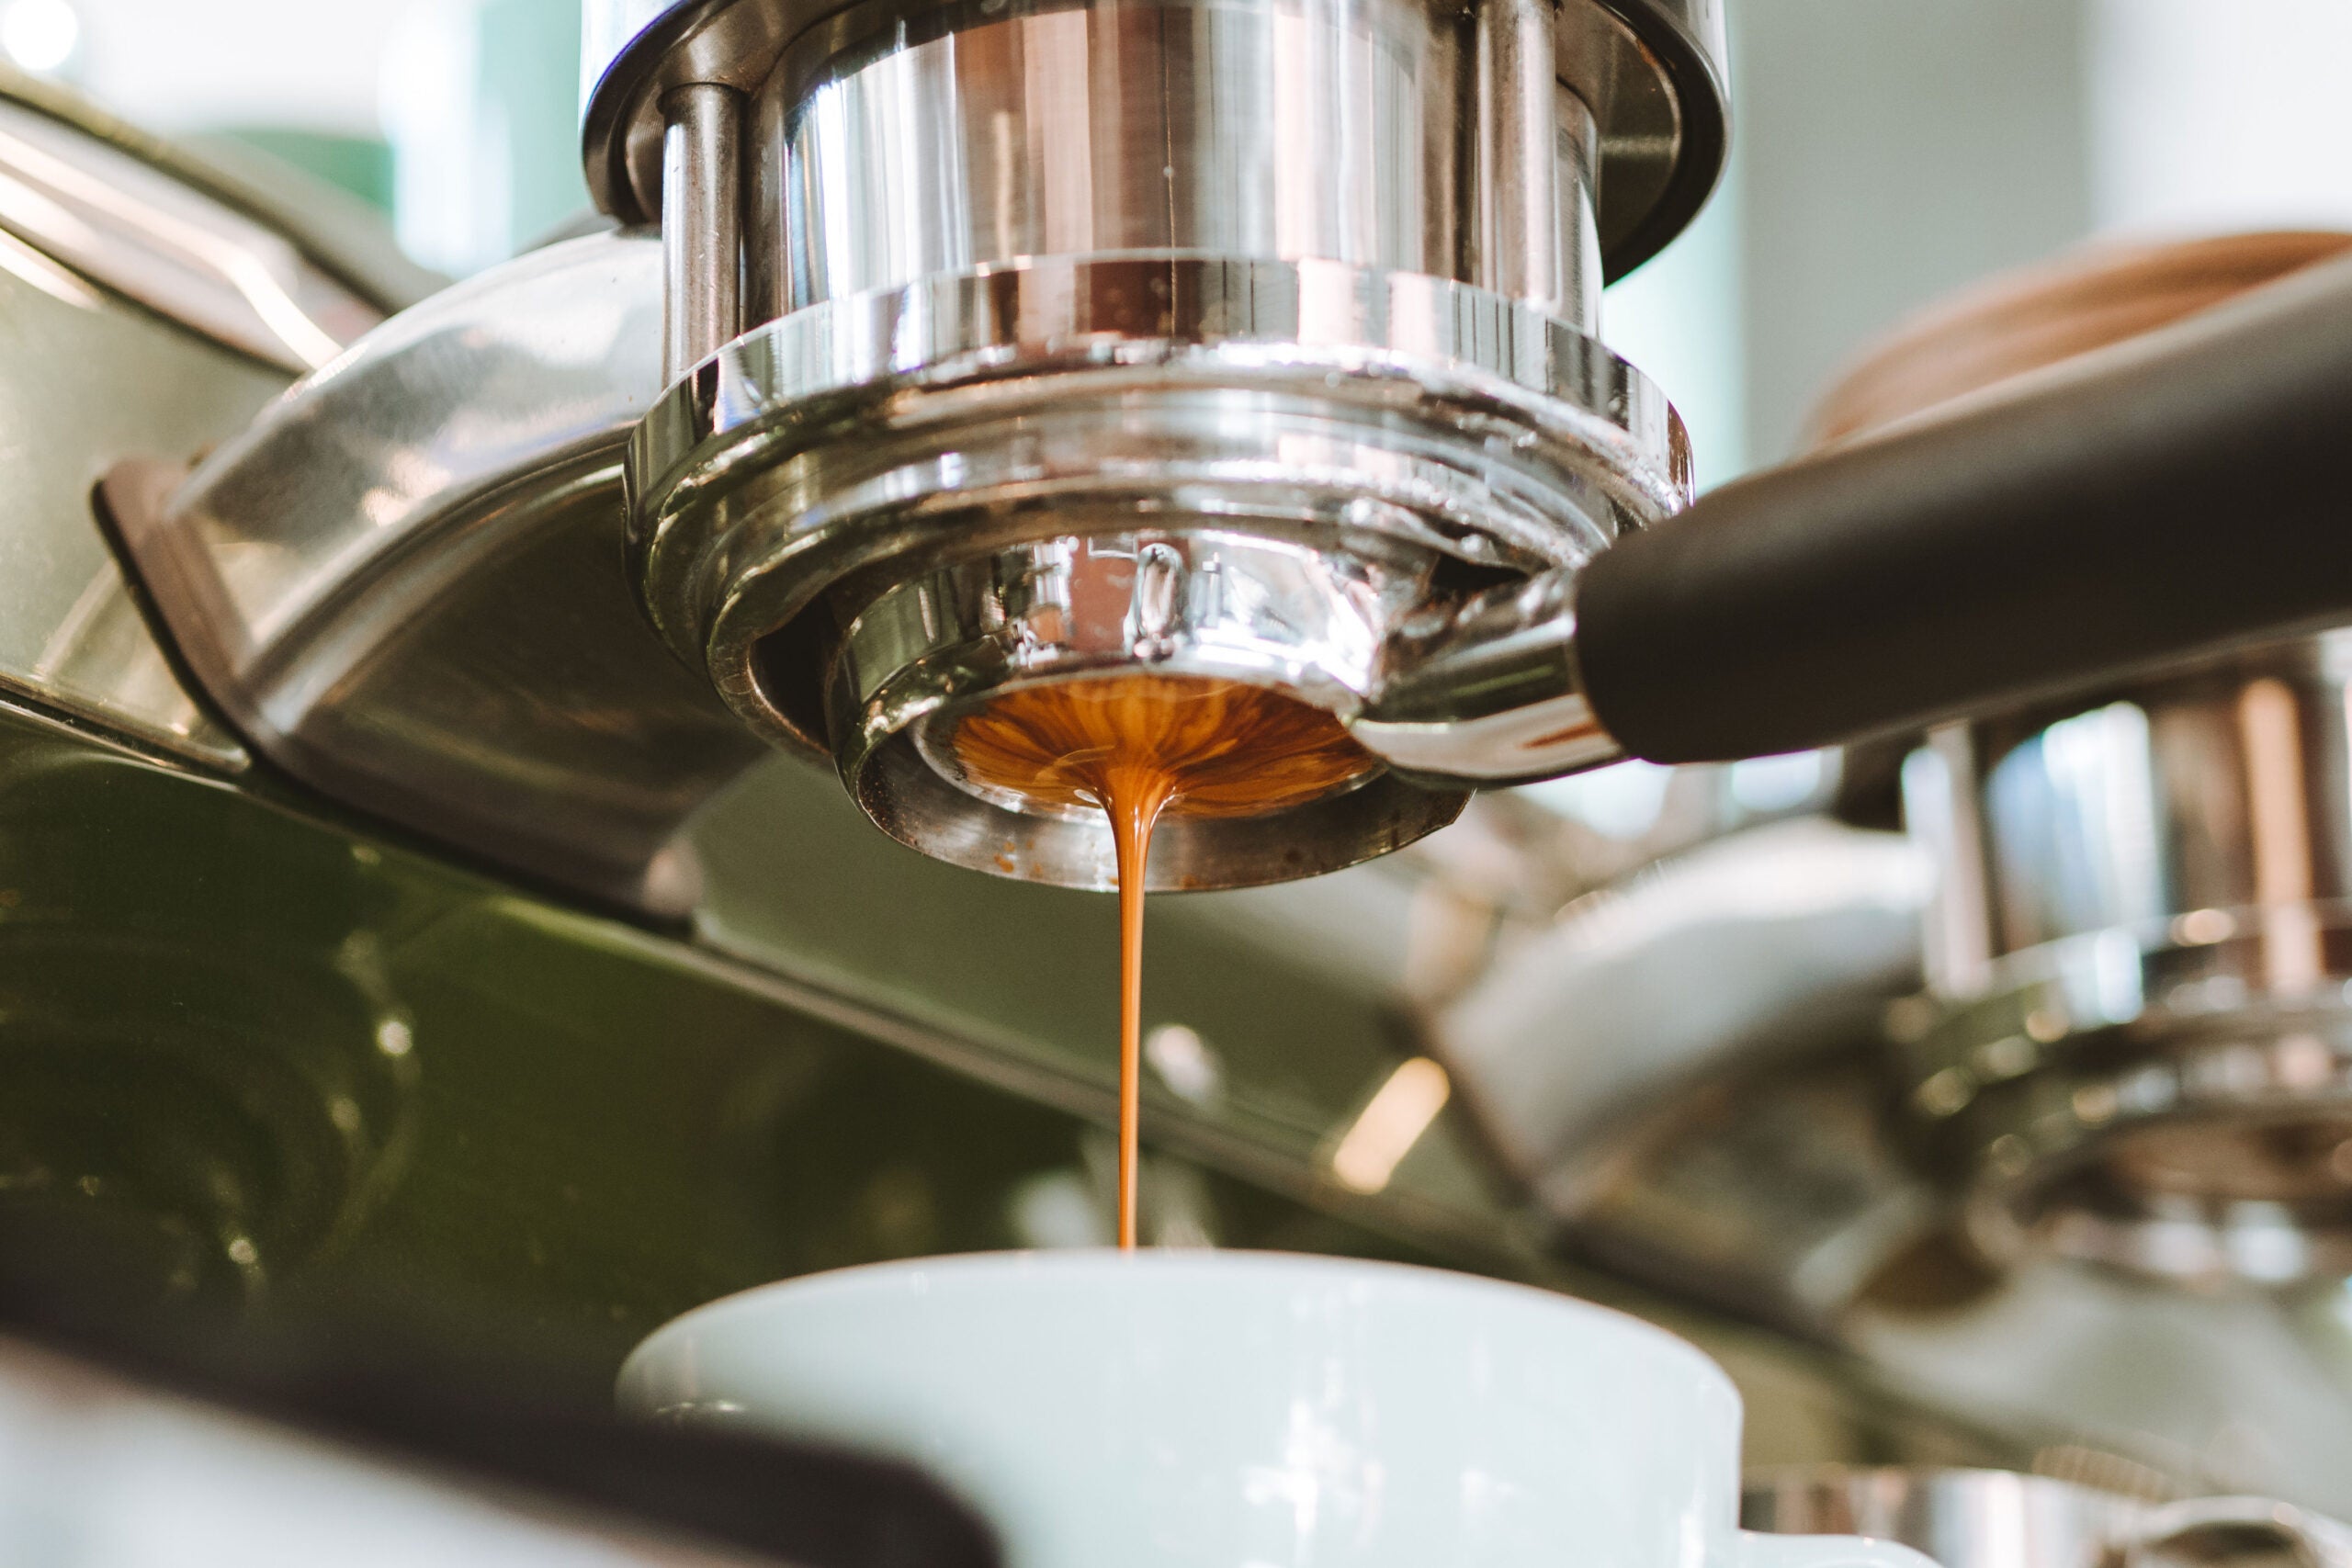 Lean mean shot pullin' machine! #espresso #espressobar